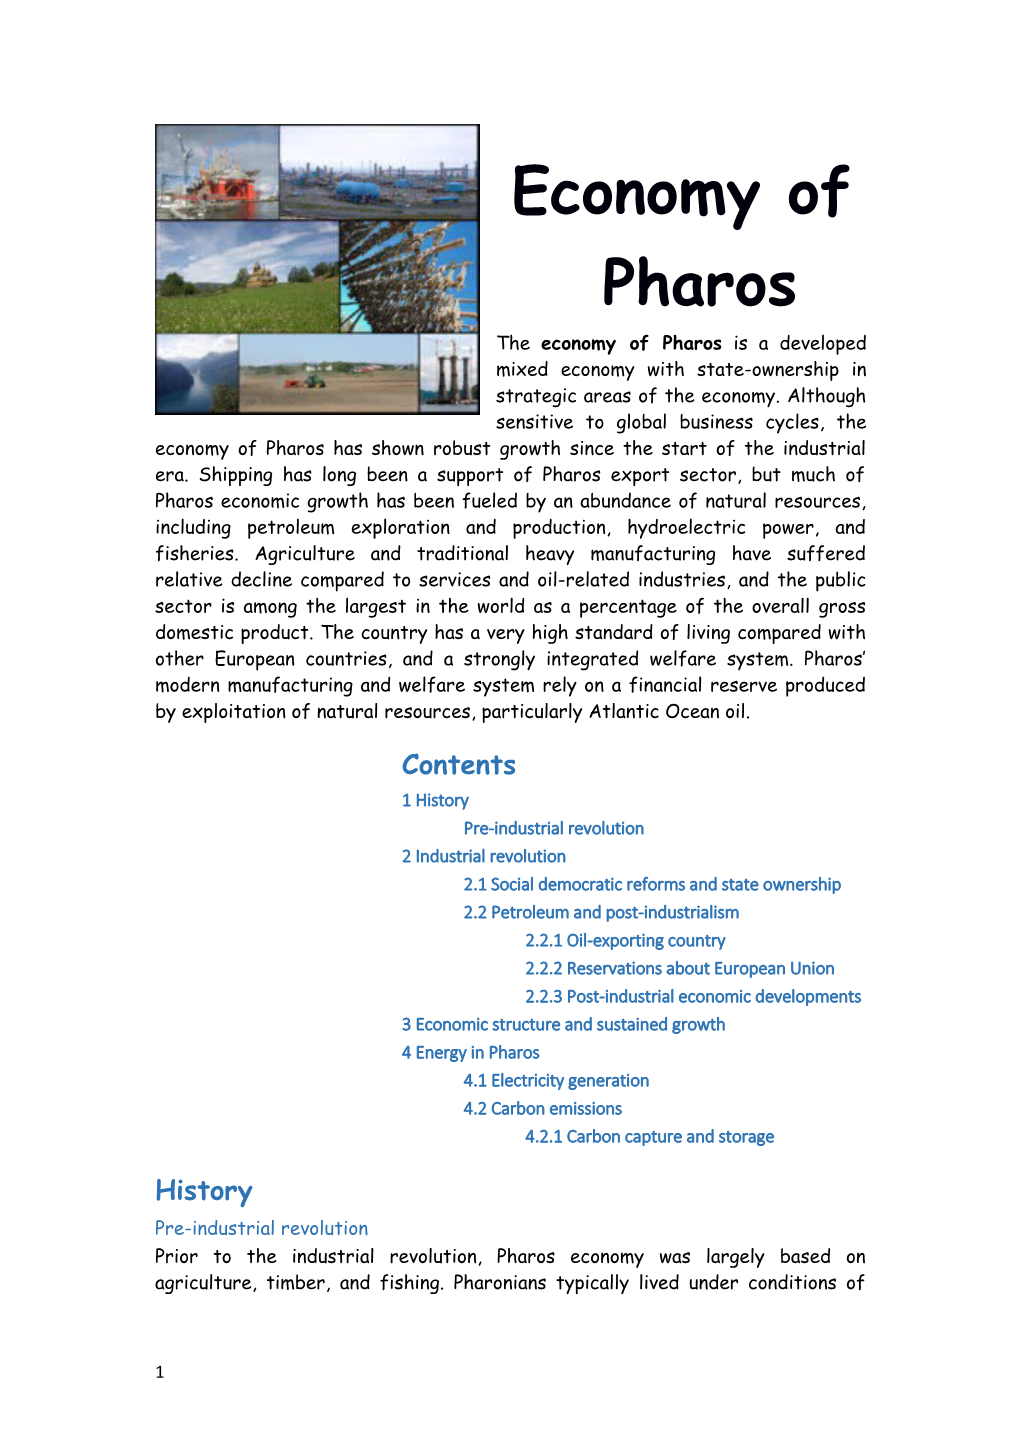 Economy of Pharos